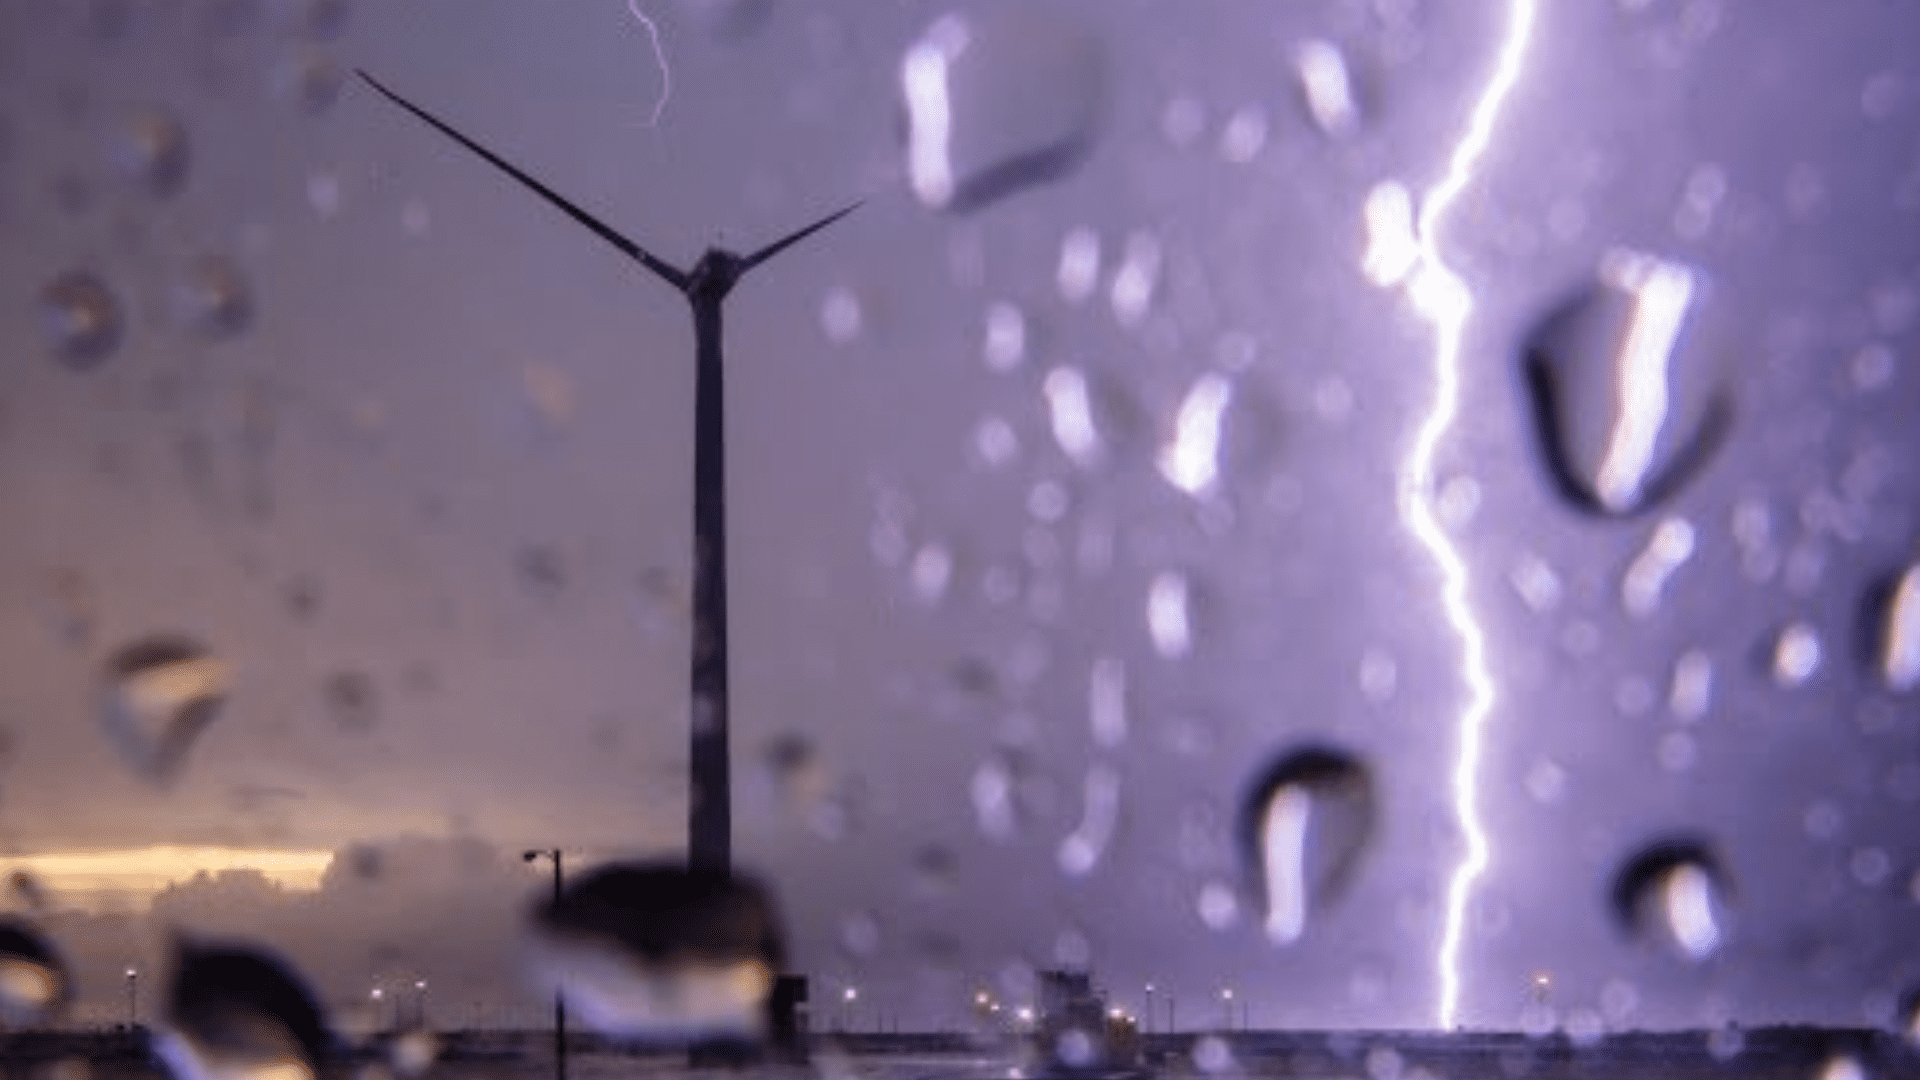 Lightning strikes near turbine 